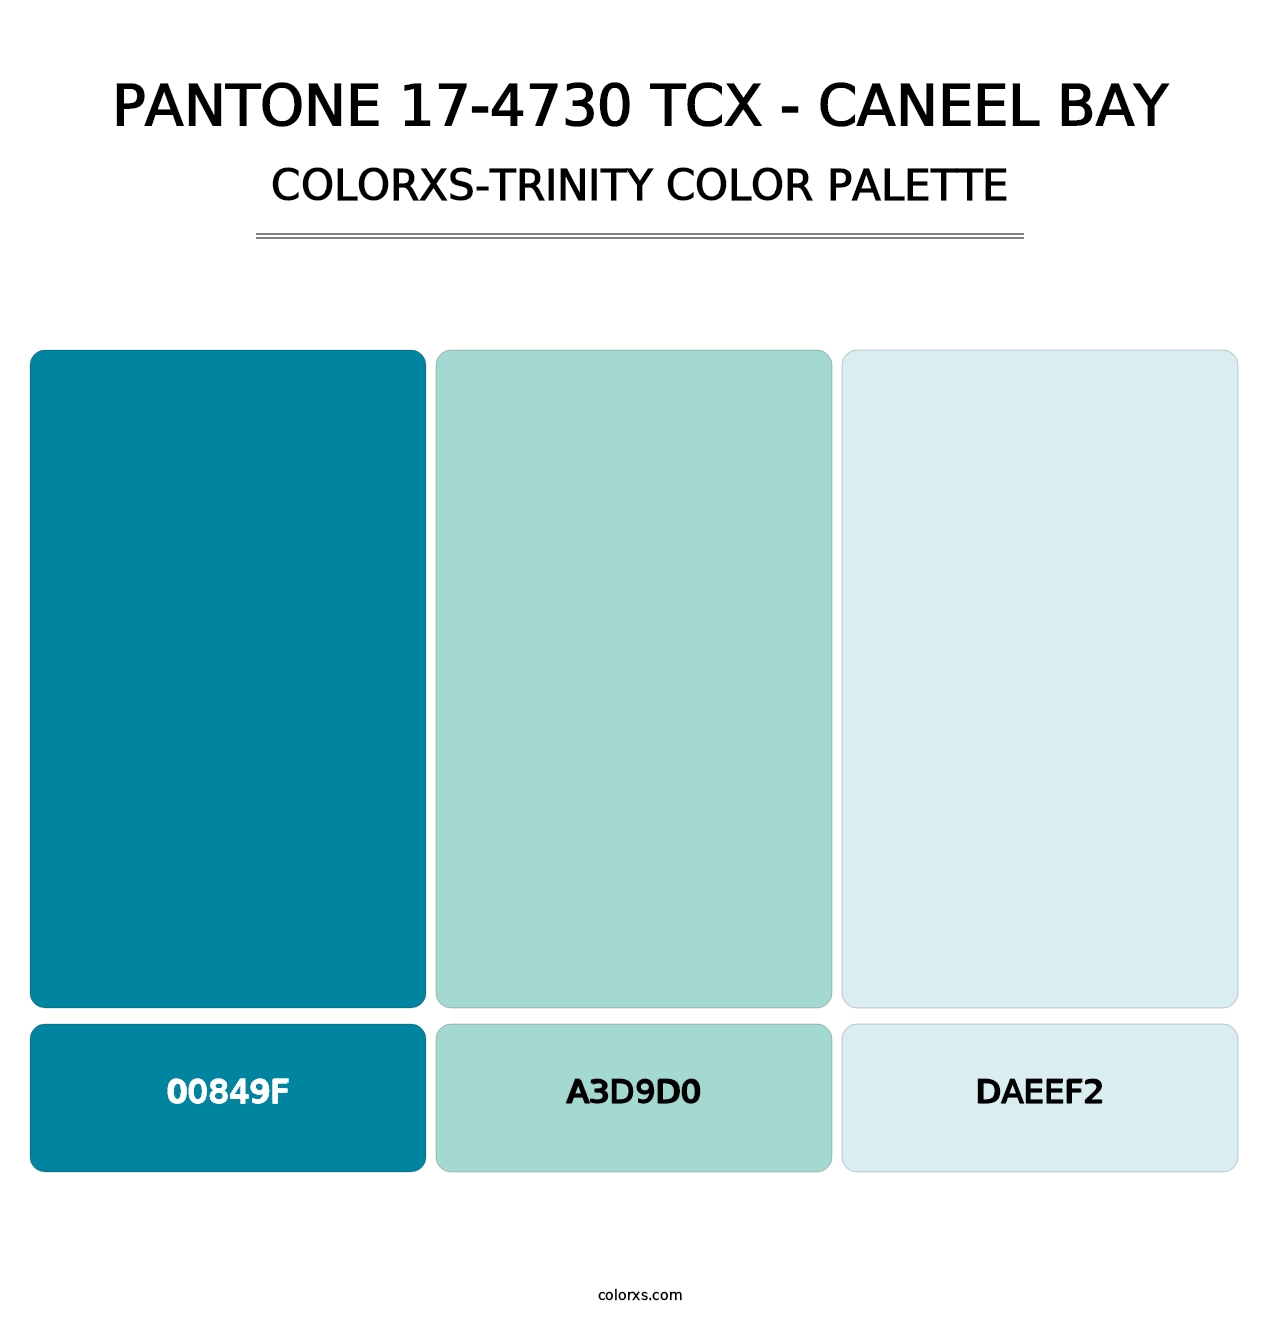 PANTONE 17-4730 TCX - Caneel Bay - Colorxs Trinity Palette